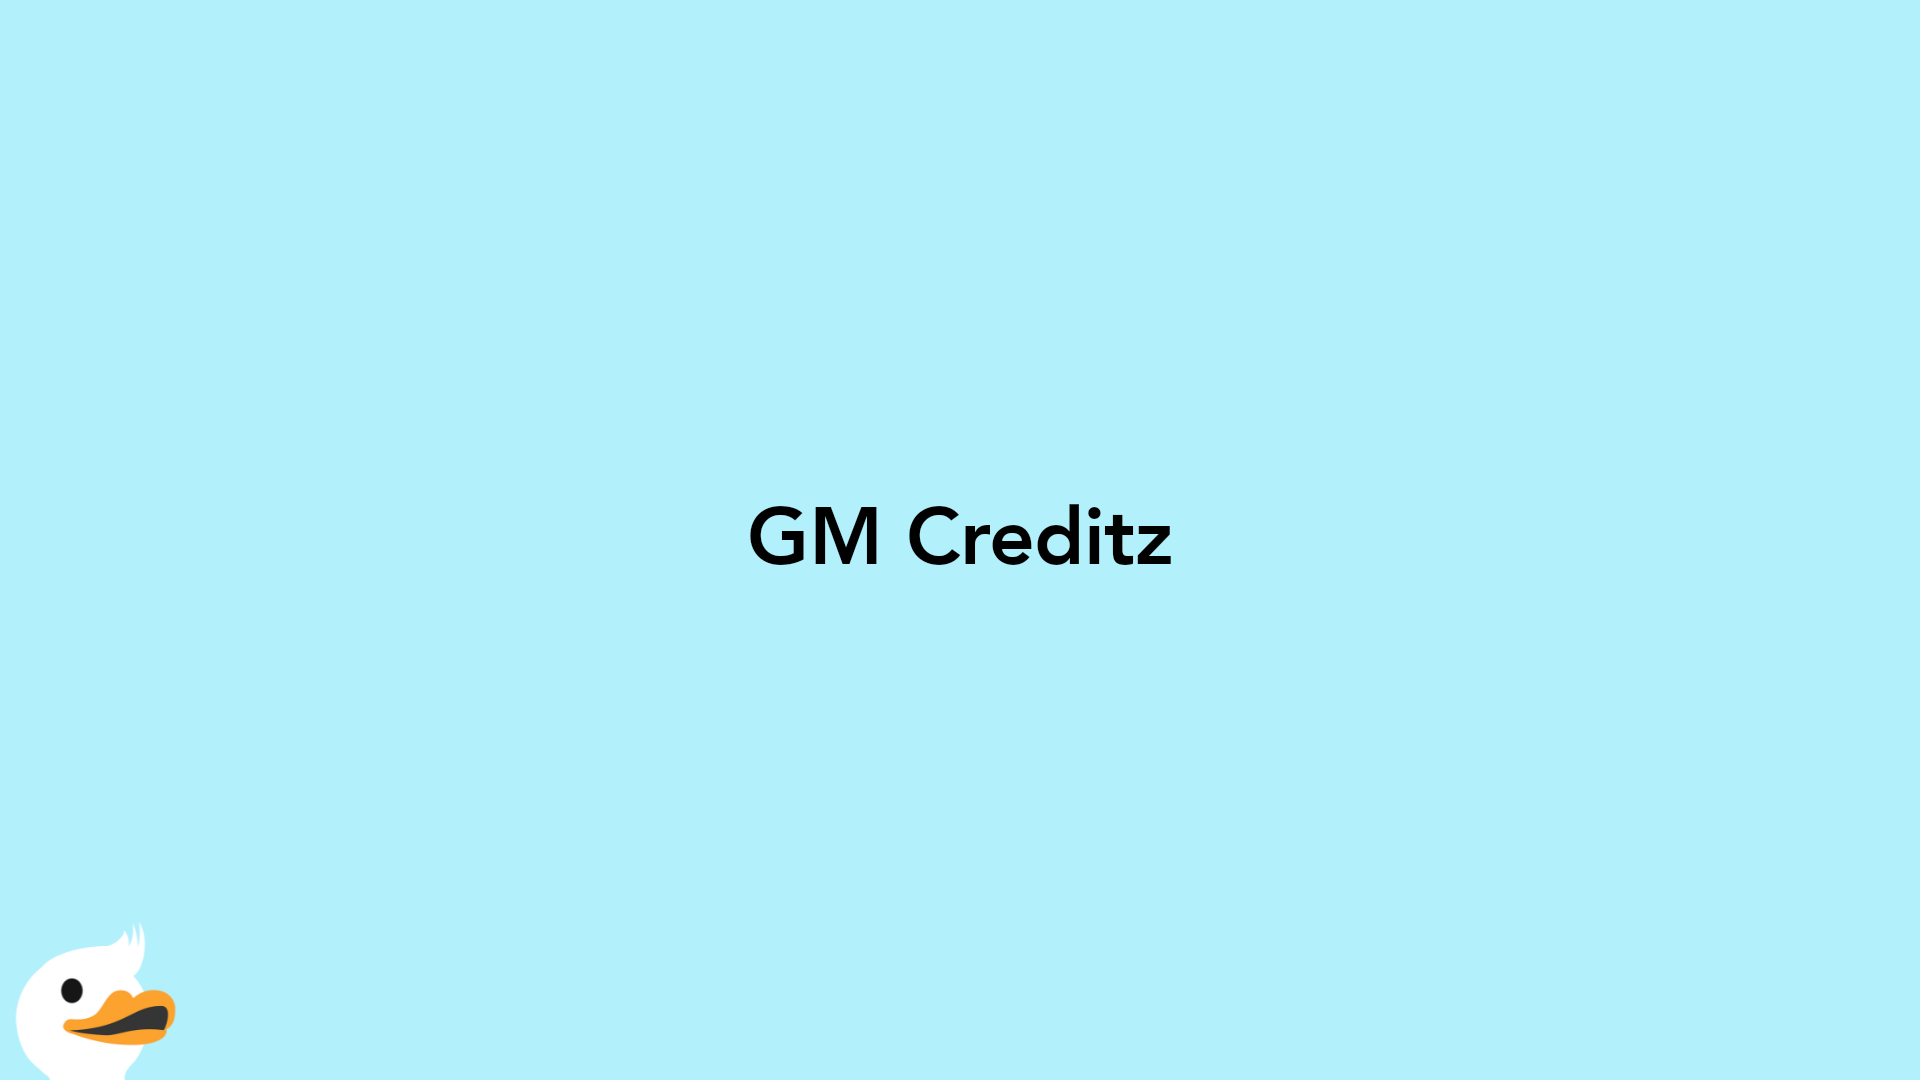 GM Creditz